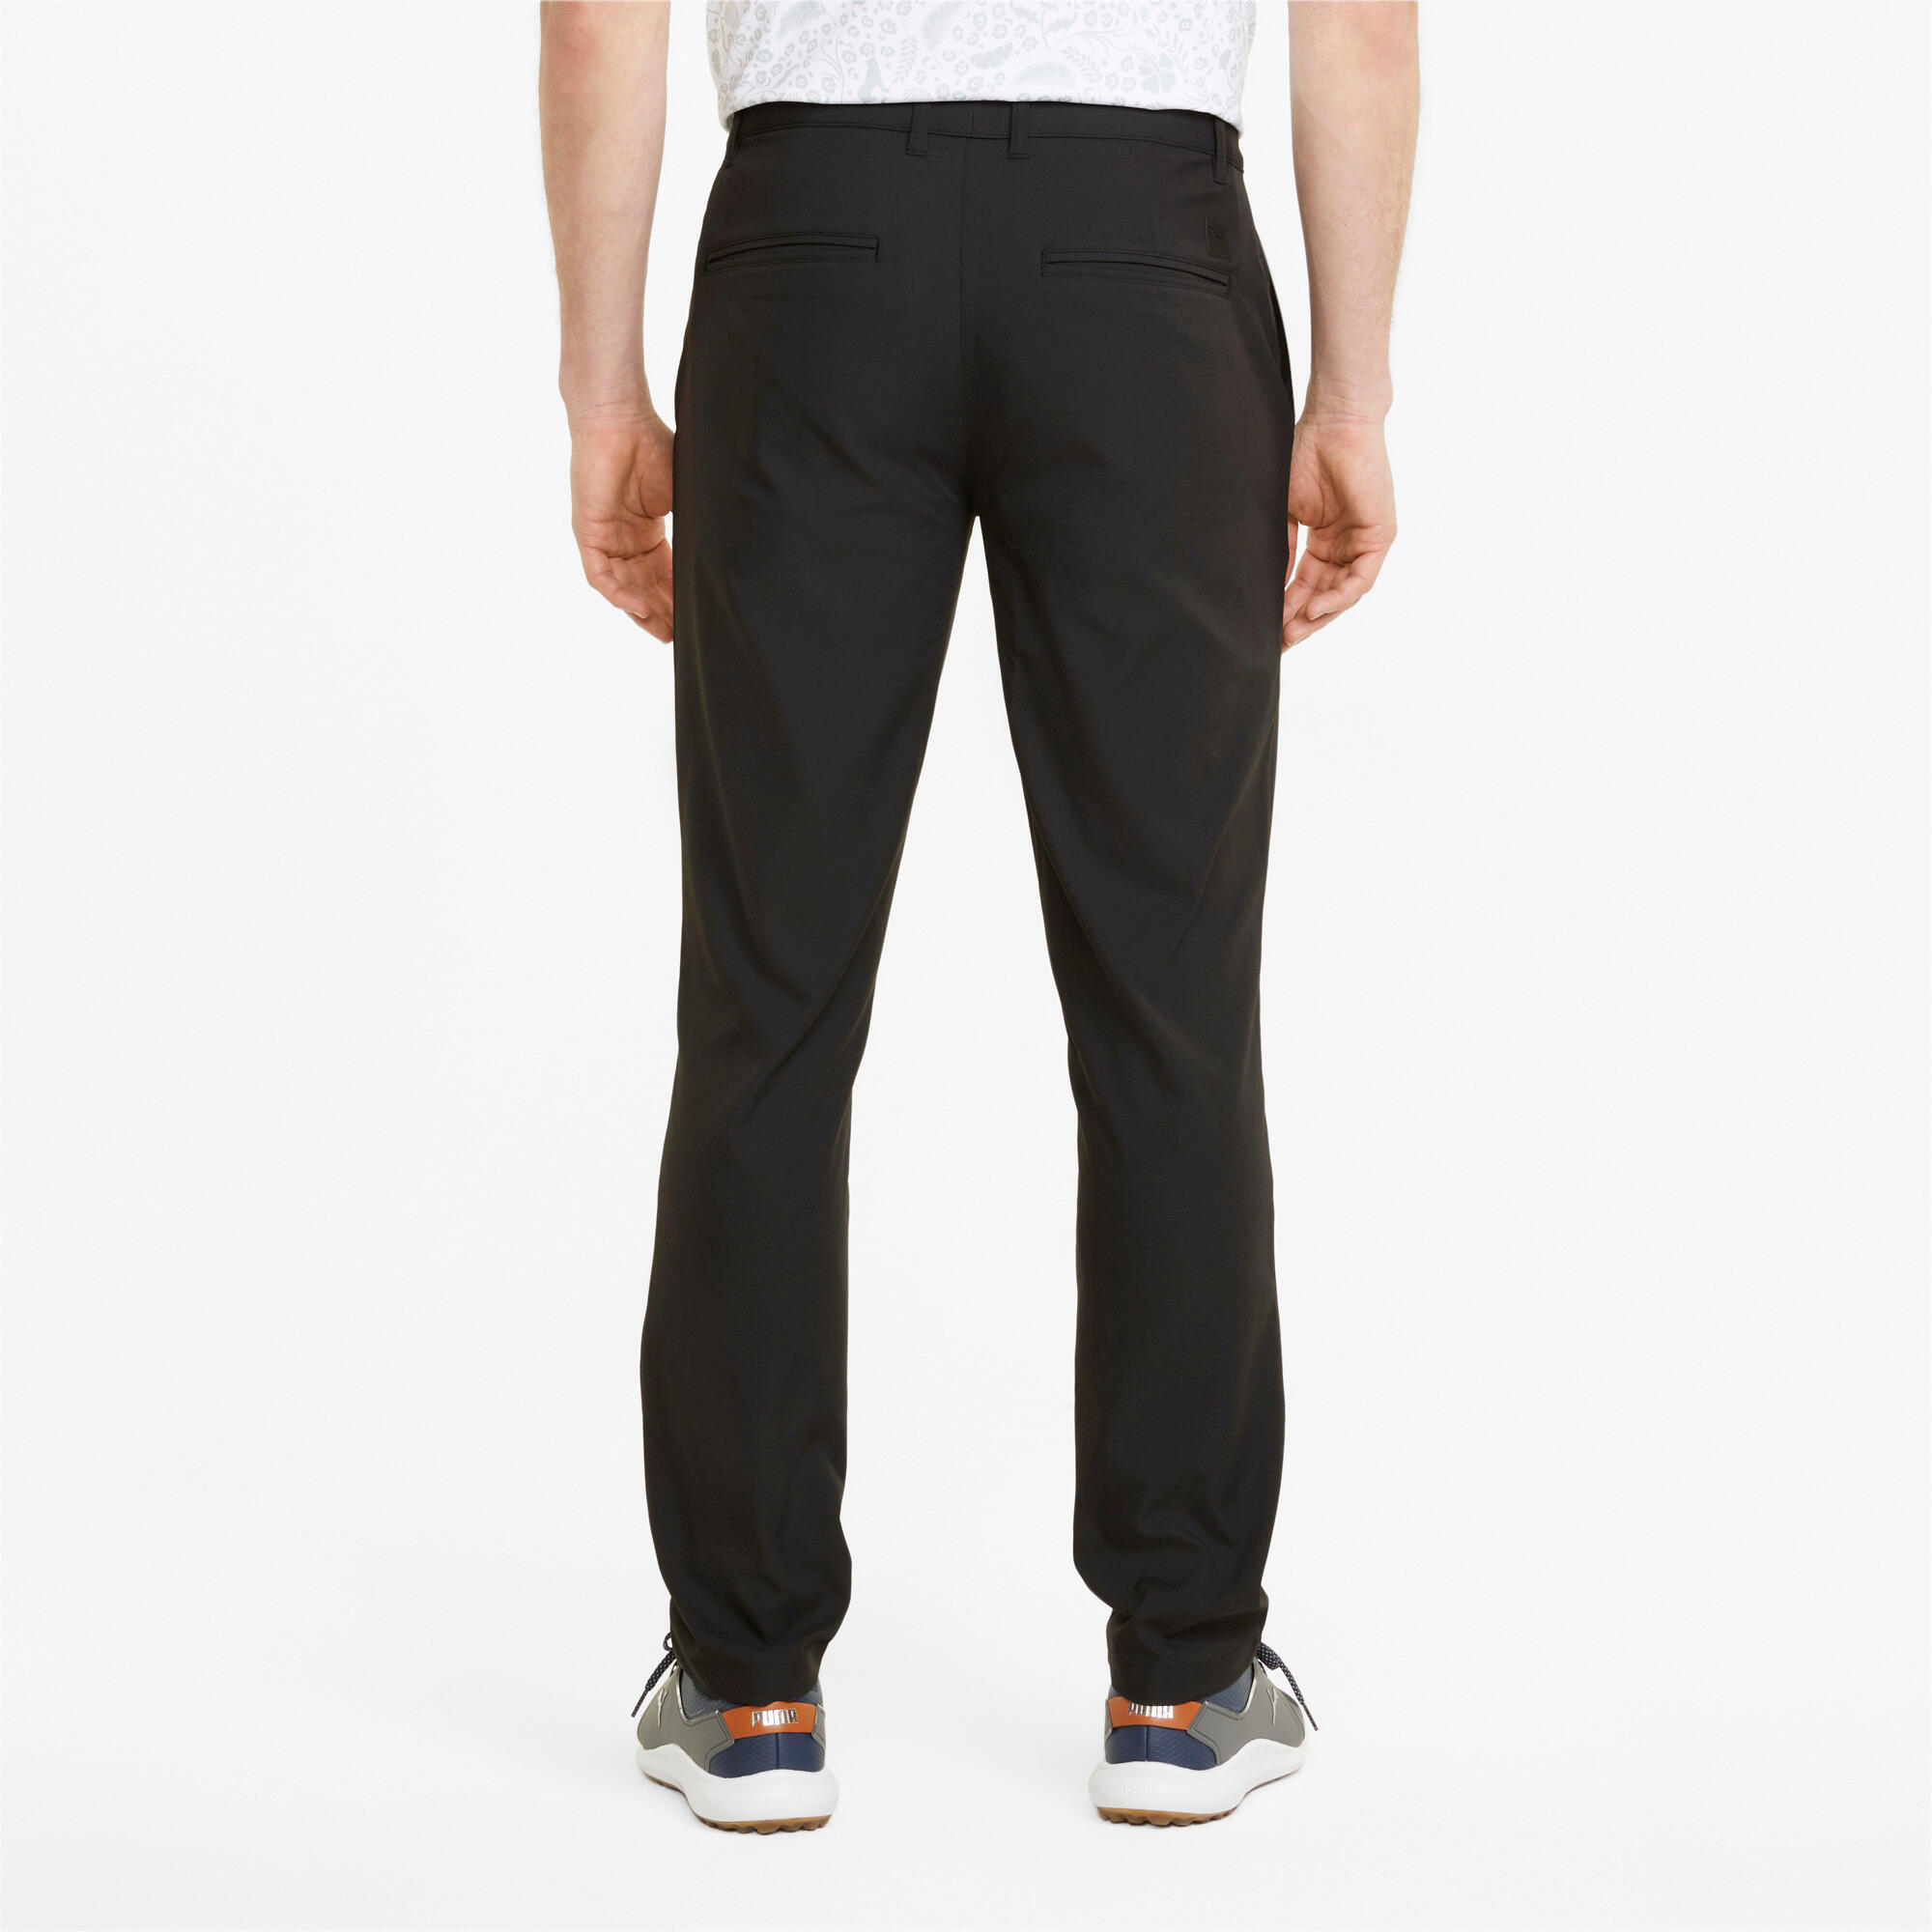 PUMA Mens Jackpot Tailored Golf Pants Trousers - Black 3/6